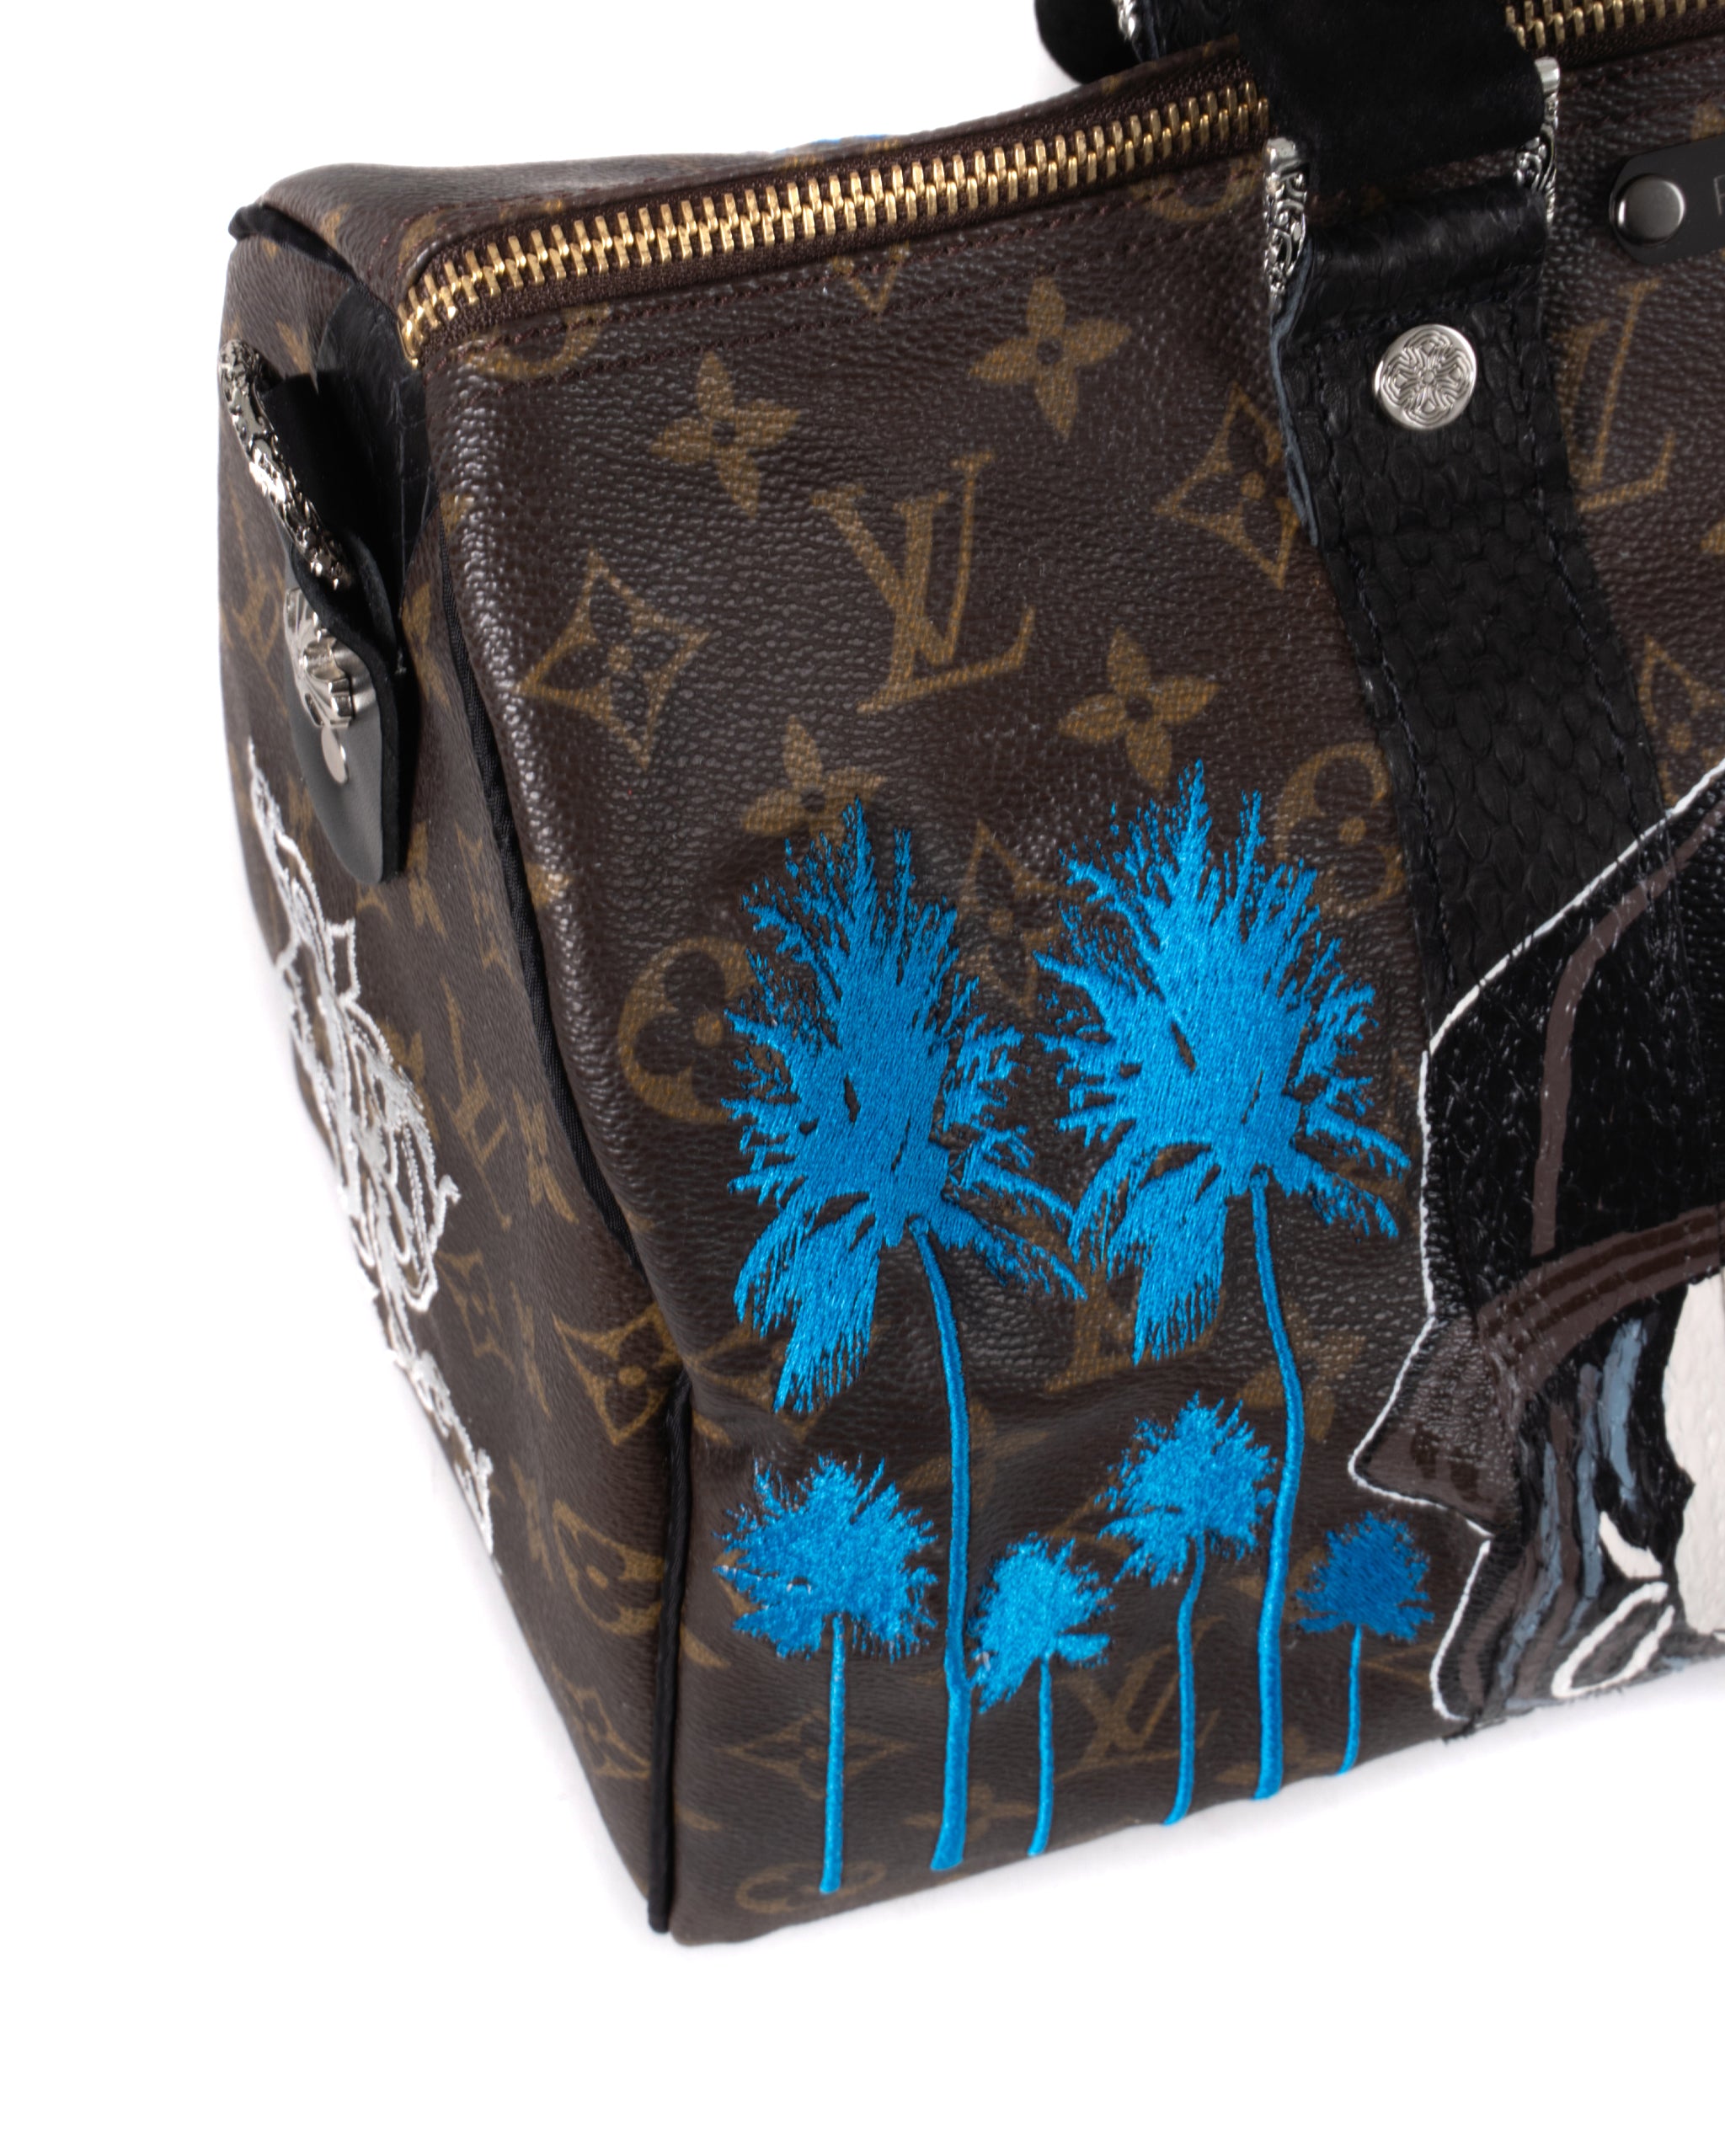 Achat - Philip Karto - Bag Philip Karto - Mikey Fck - 40 cm - Customized  Louis Vuitton bag for women